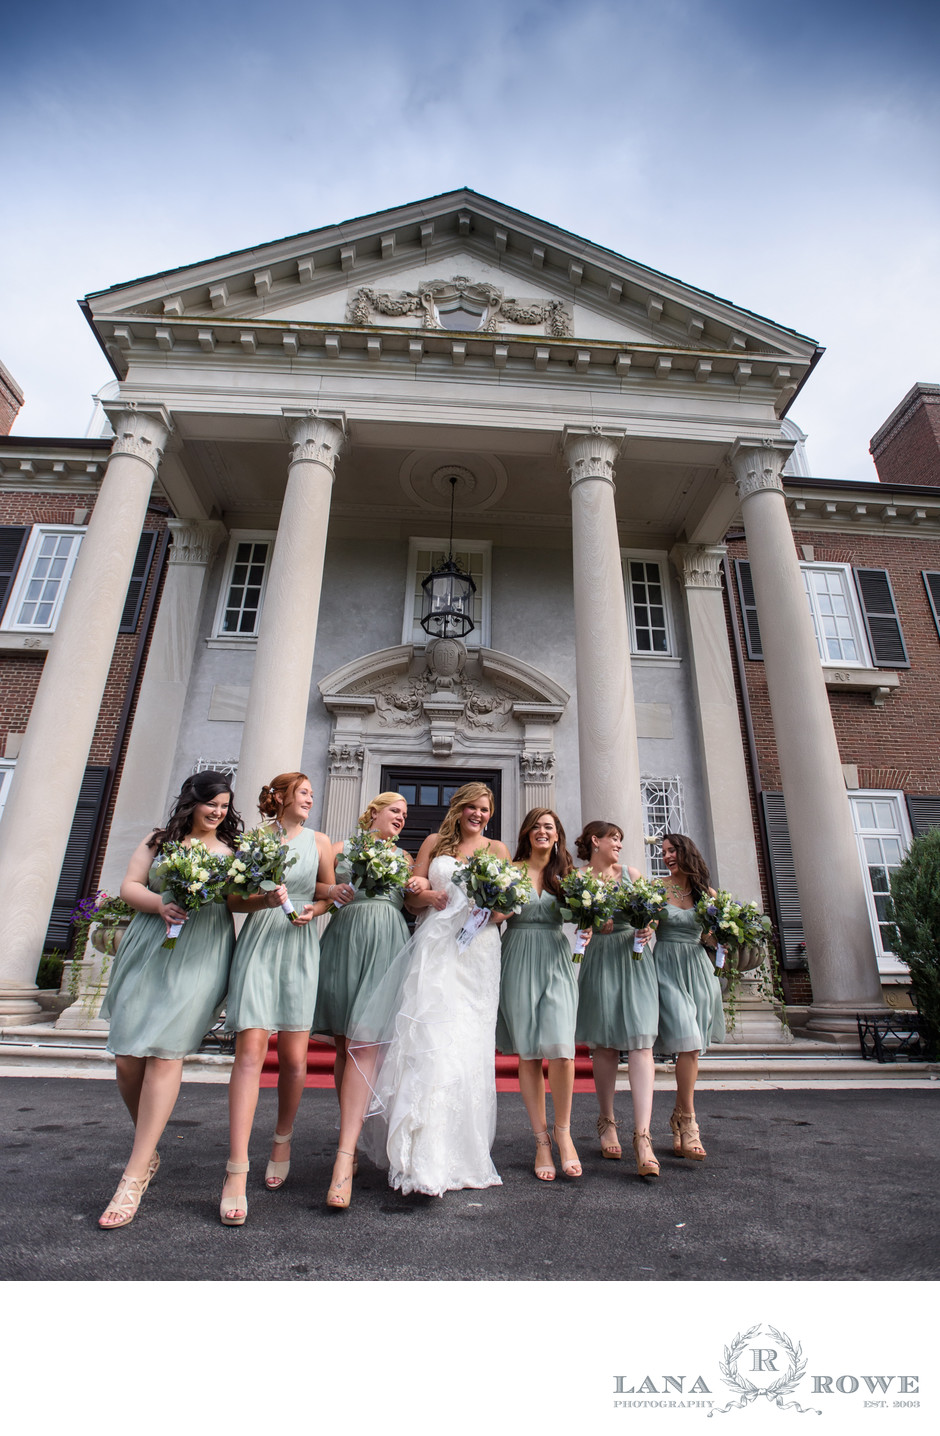 Glen Cove Mansion bride with girls